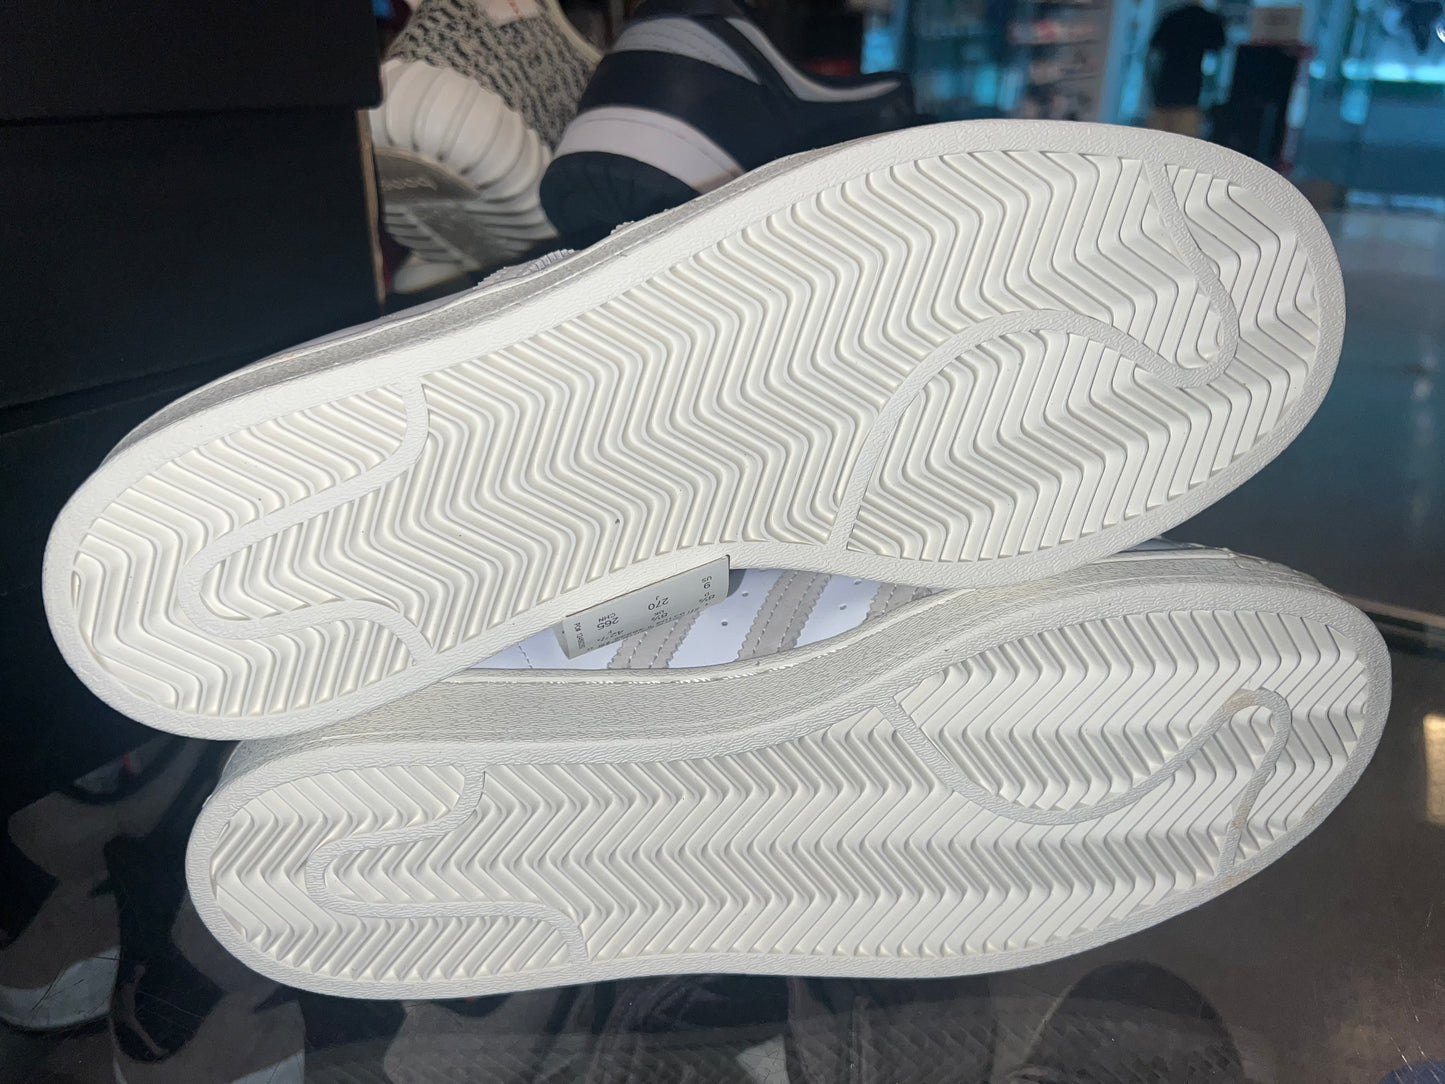 Size 9 Adidas Superstar “White Black” Brand New (Mall)